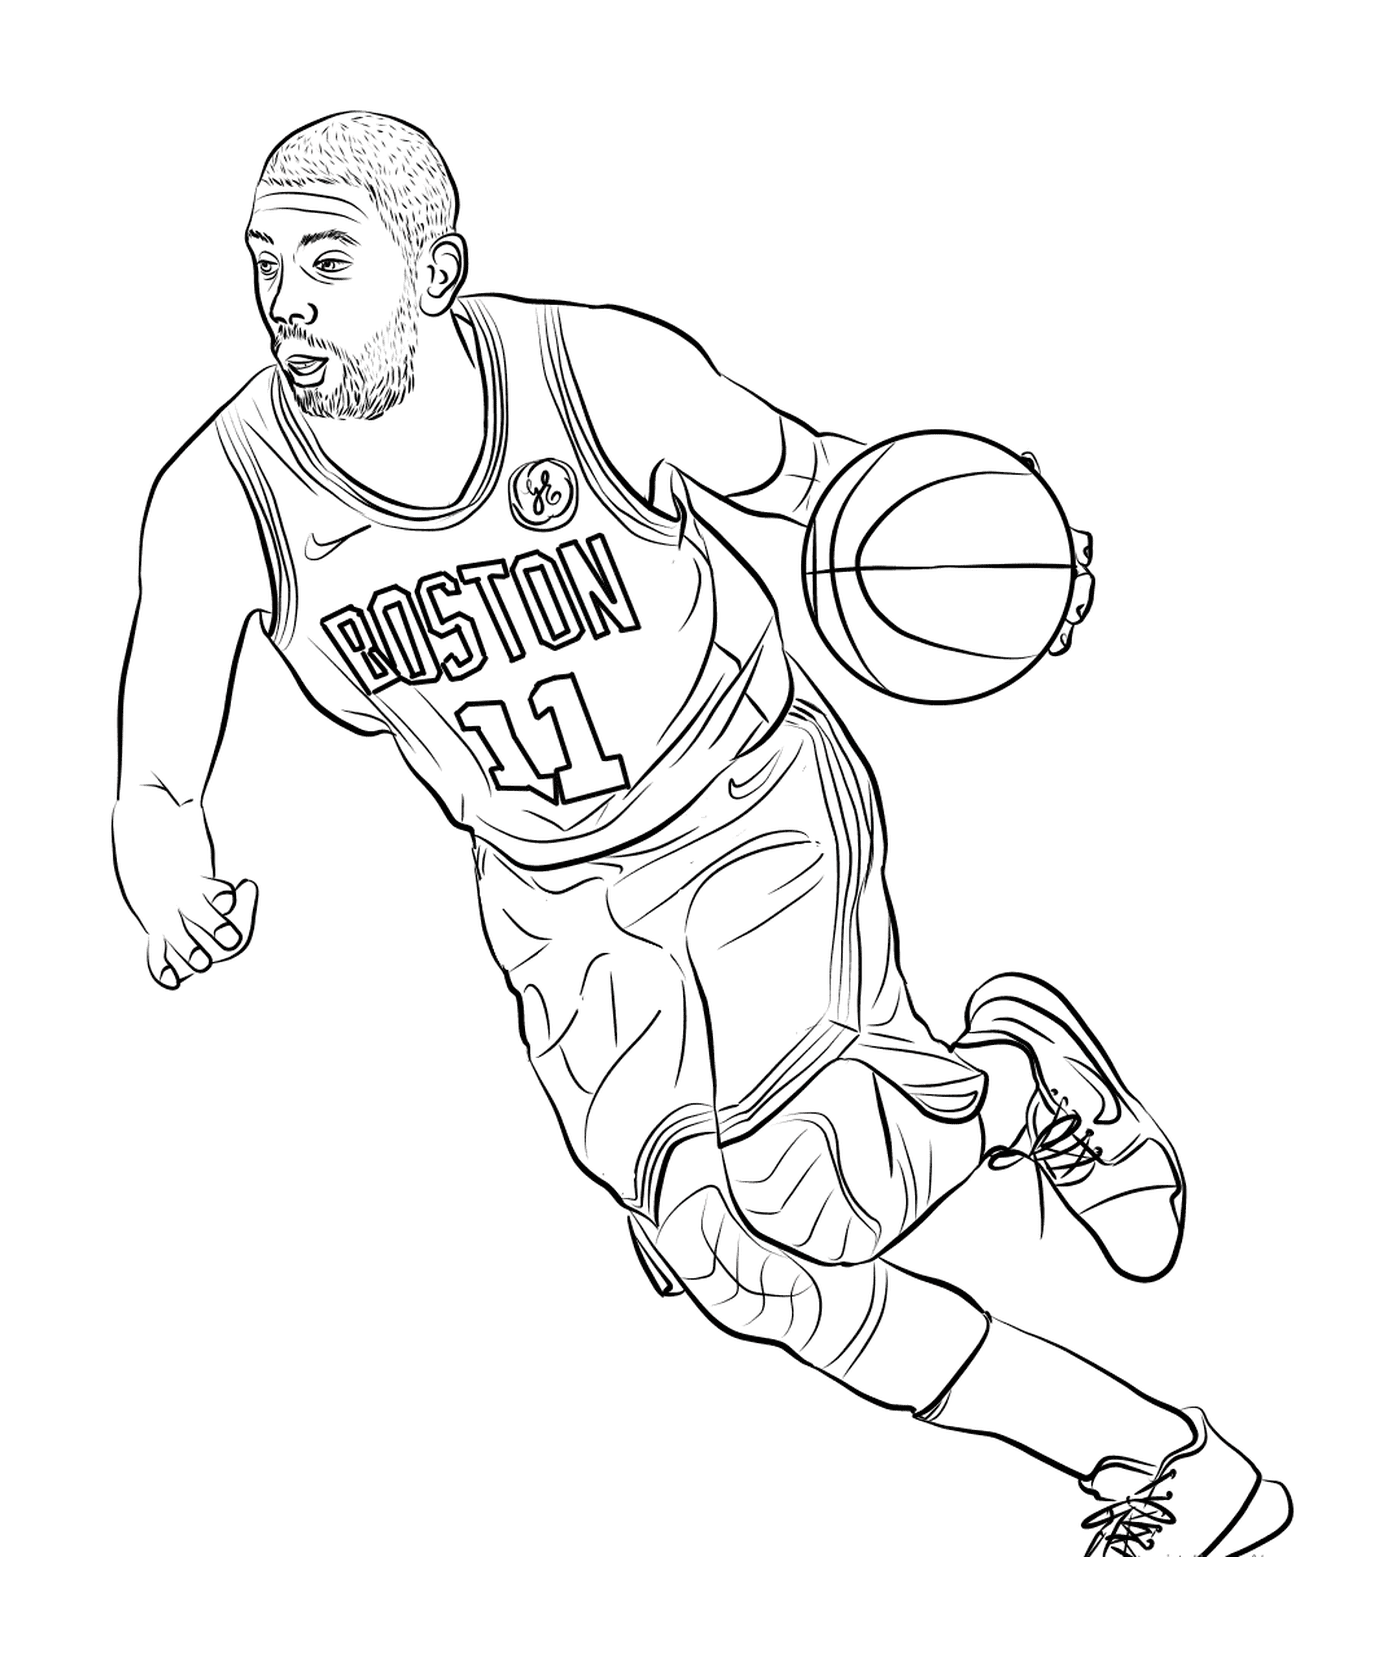  Kyrie Irving gioca a basket 